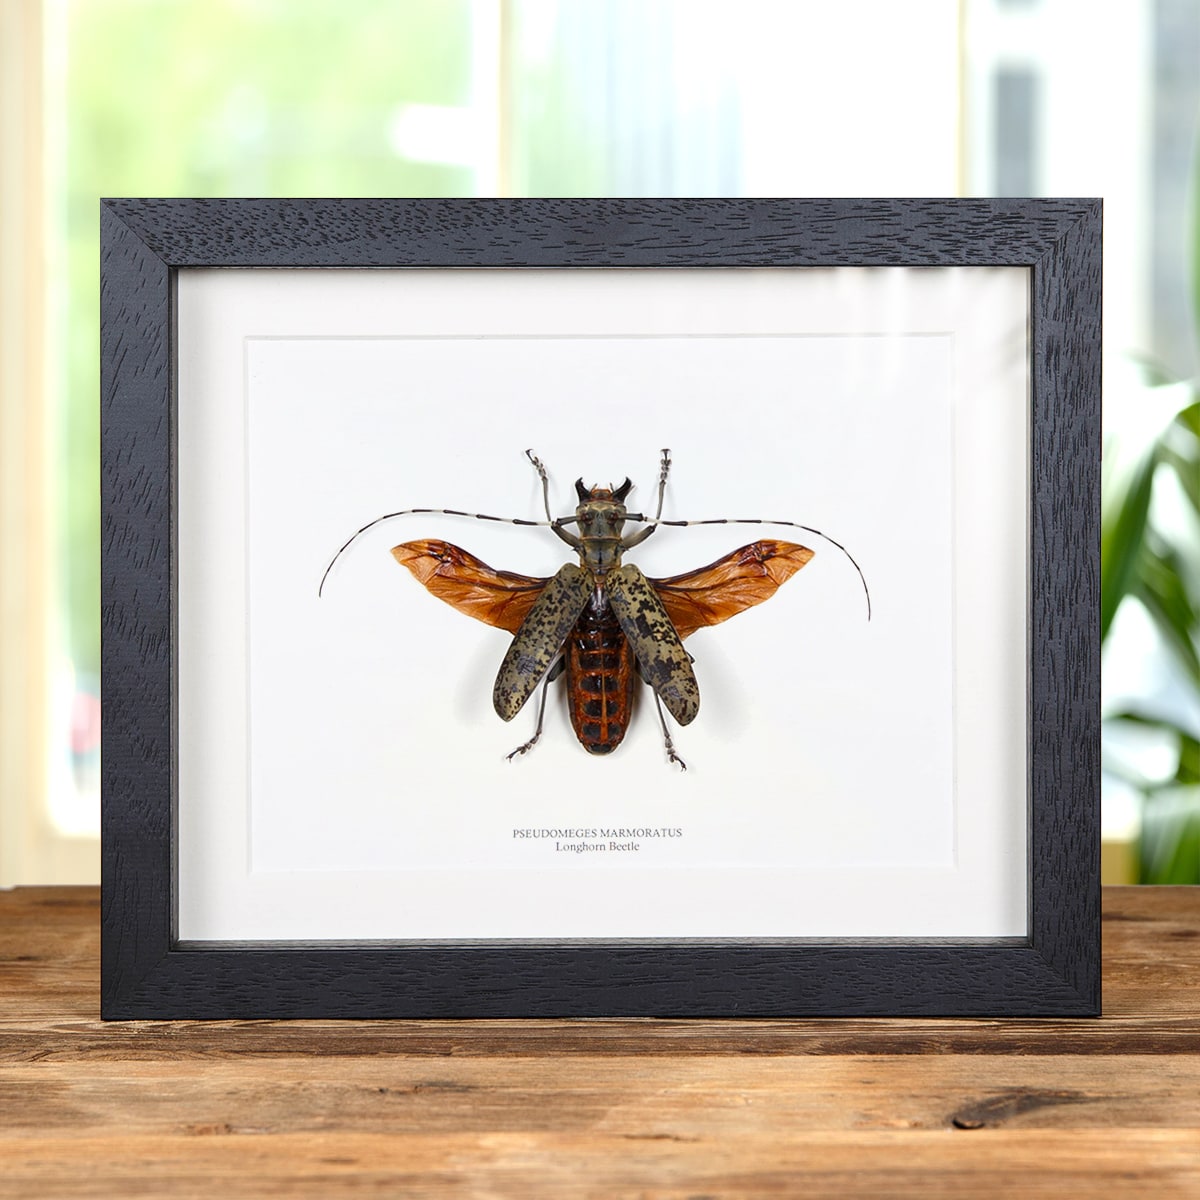 Minibeast Giant Spread Longhorn Beetle in Box Frame (Pseudomeges marmoratus)